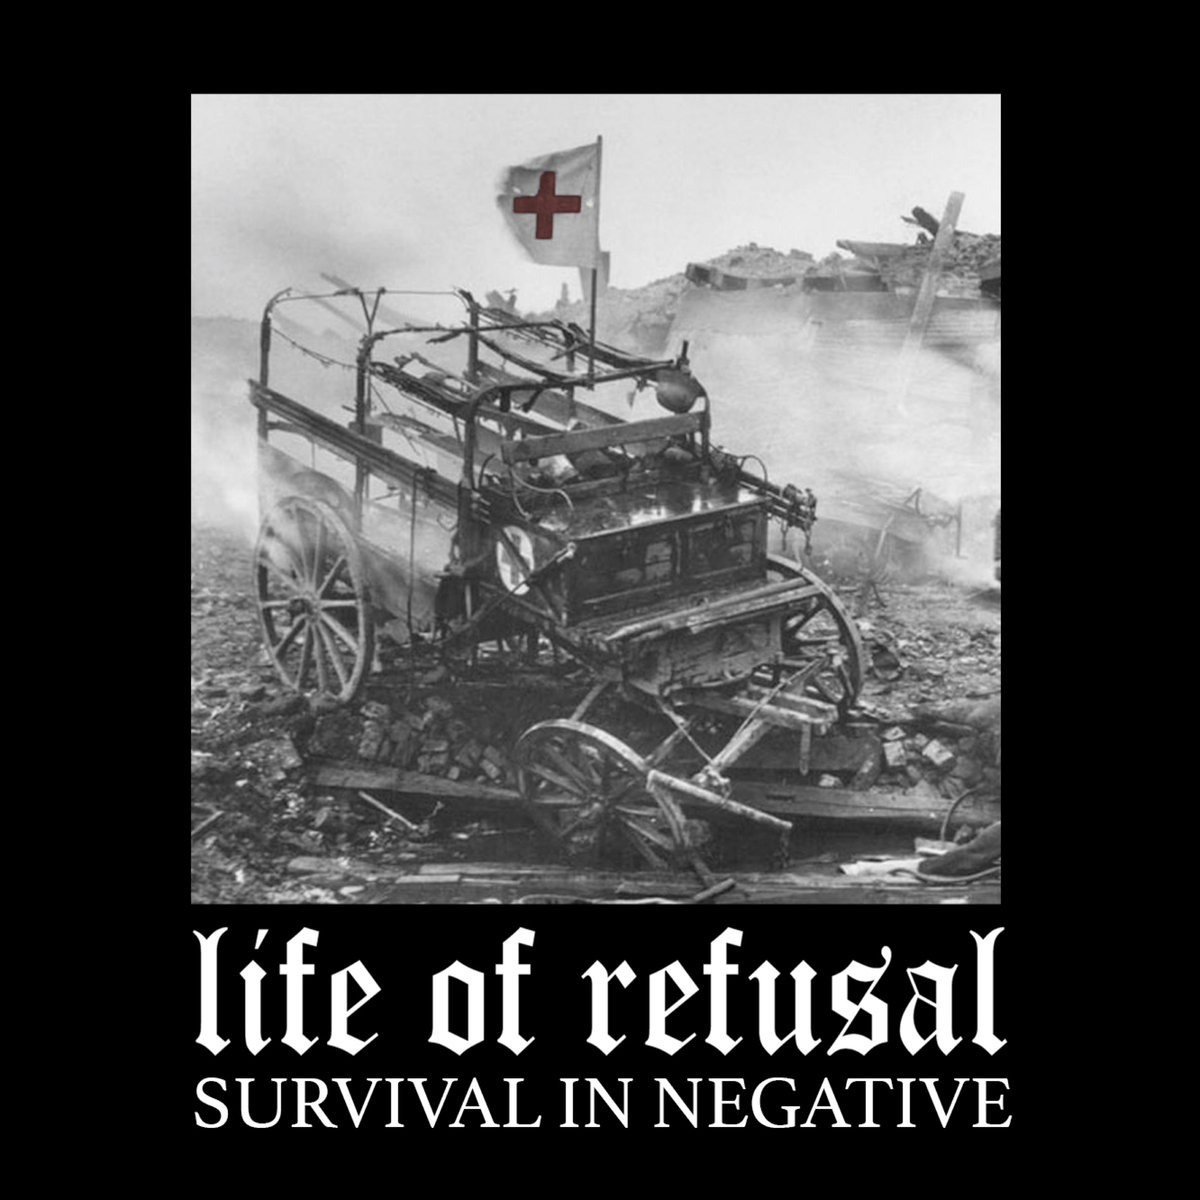 LIFE OF REFUSAL - Survival in negative